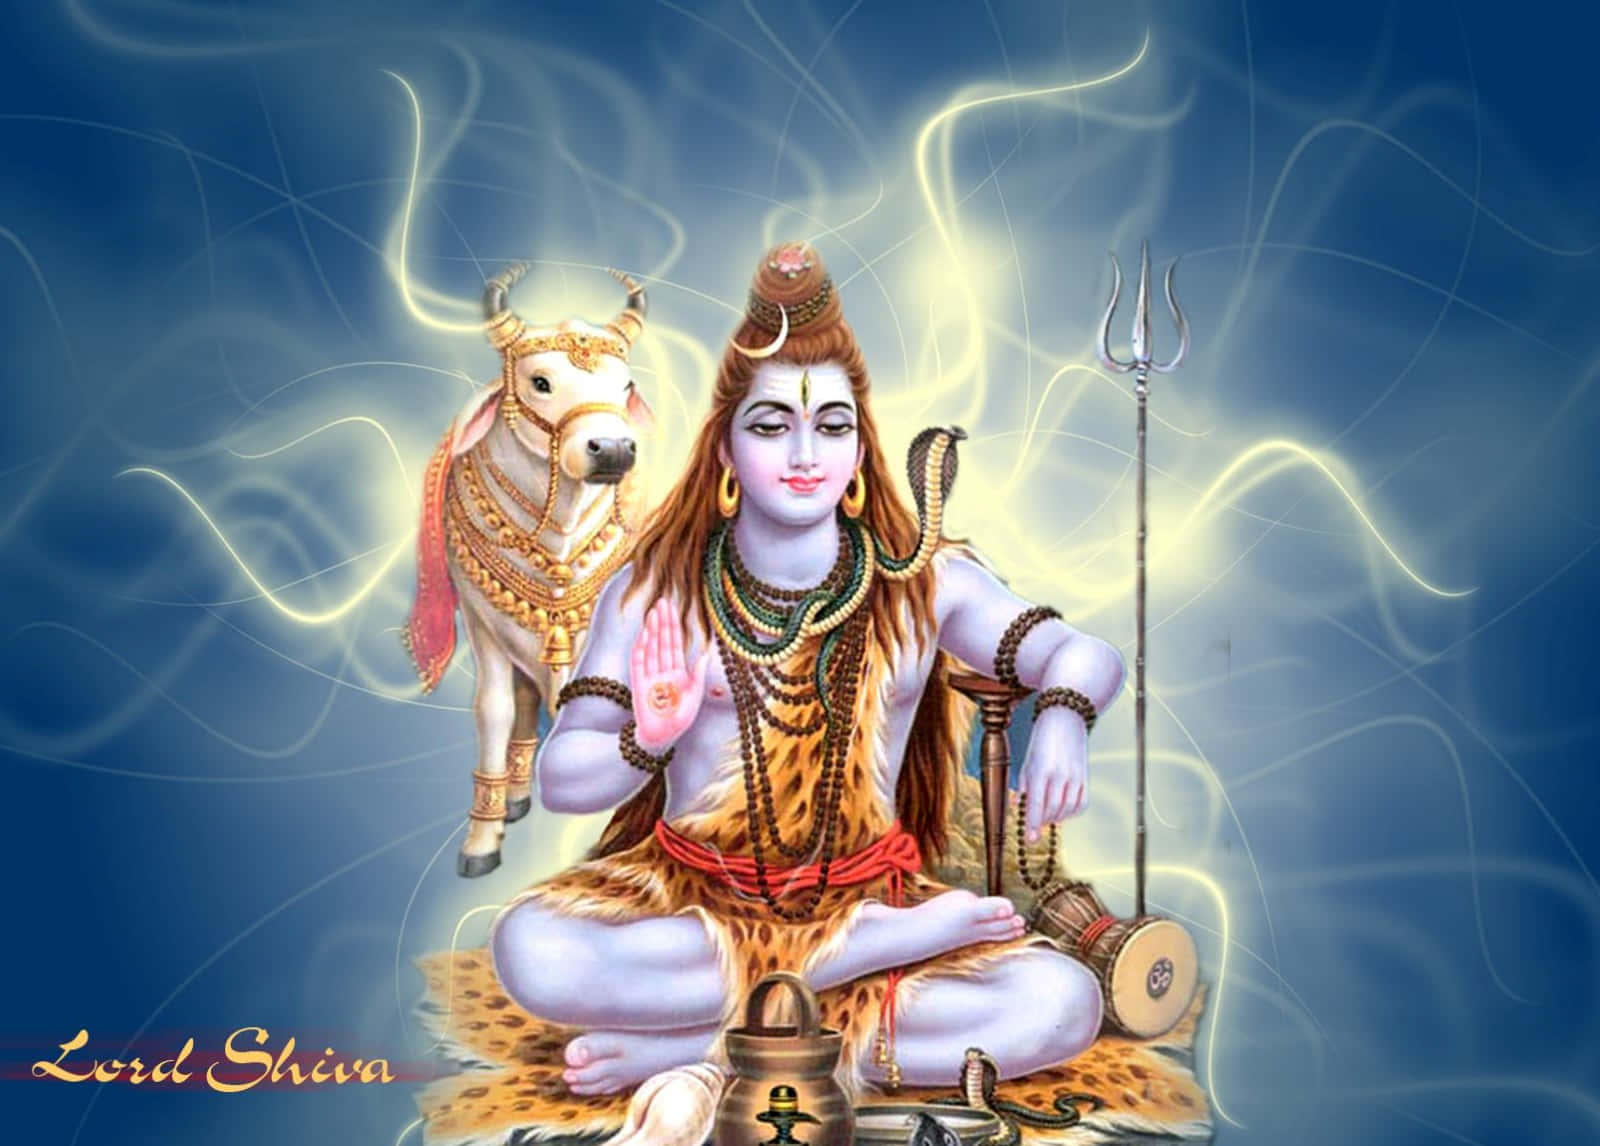 Celebrate the eternal grace of Lord Shiva